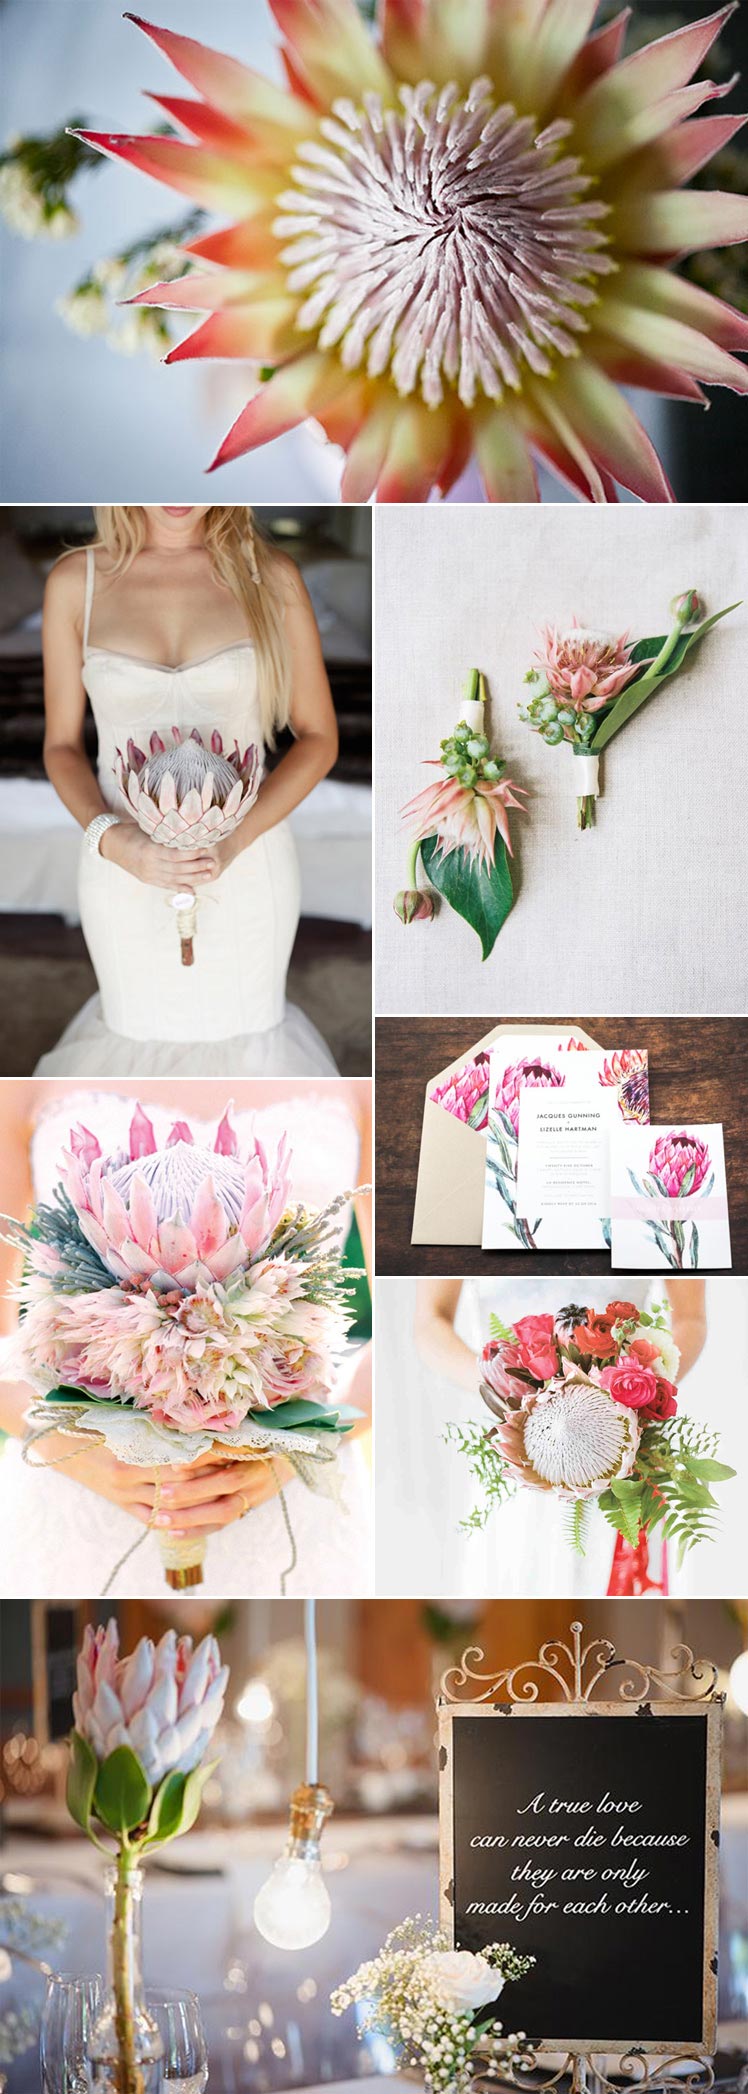 Stunning protea wedding bouquet ideas